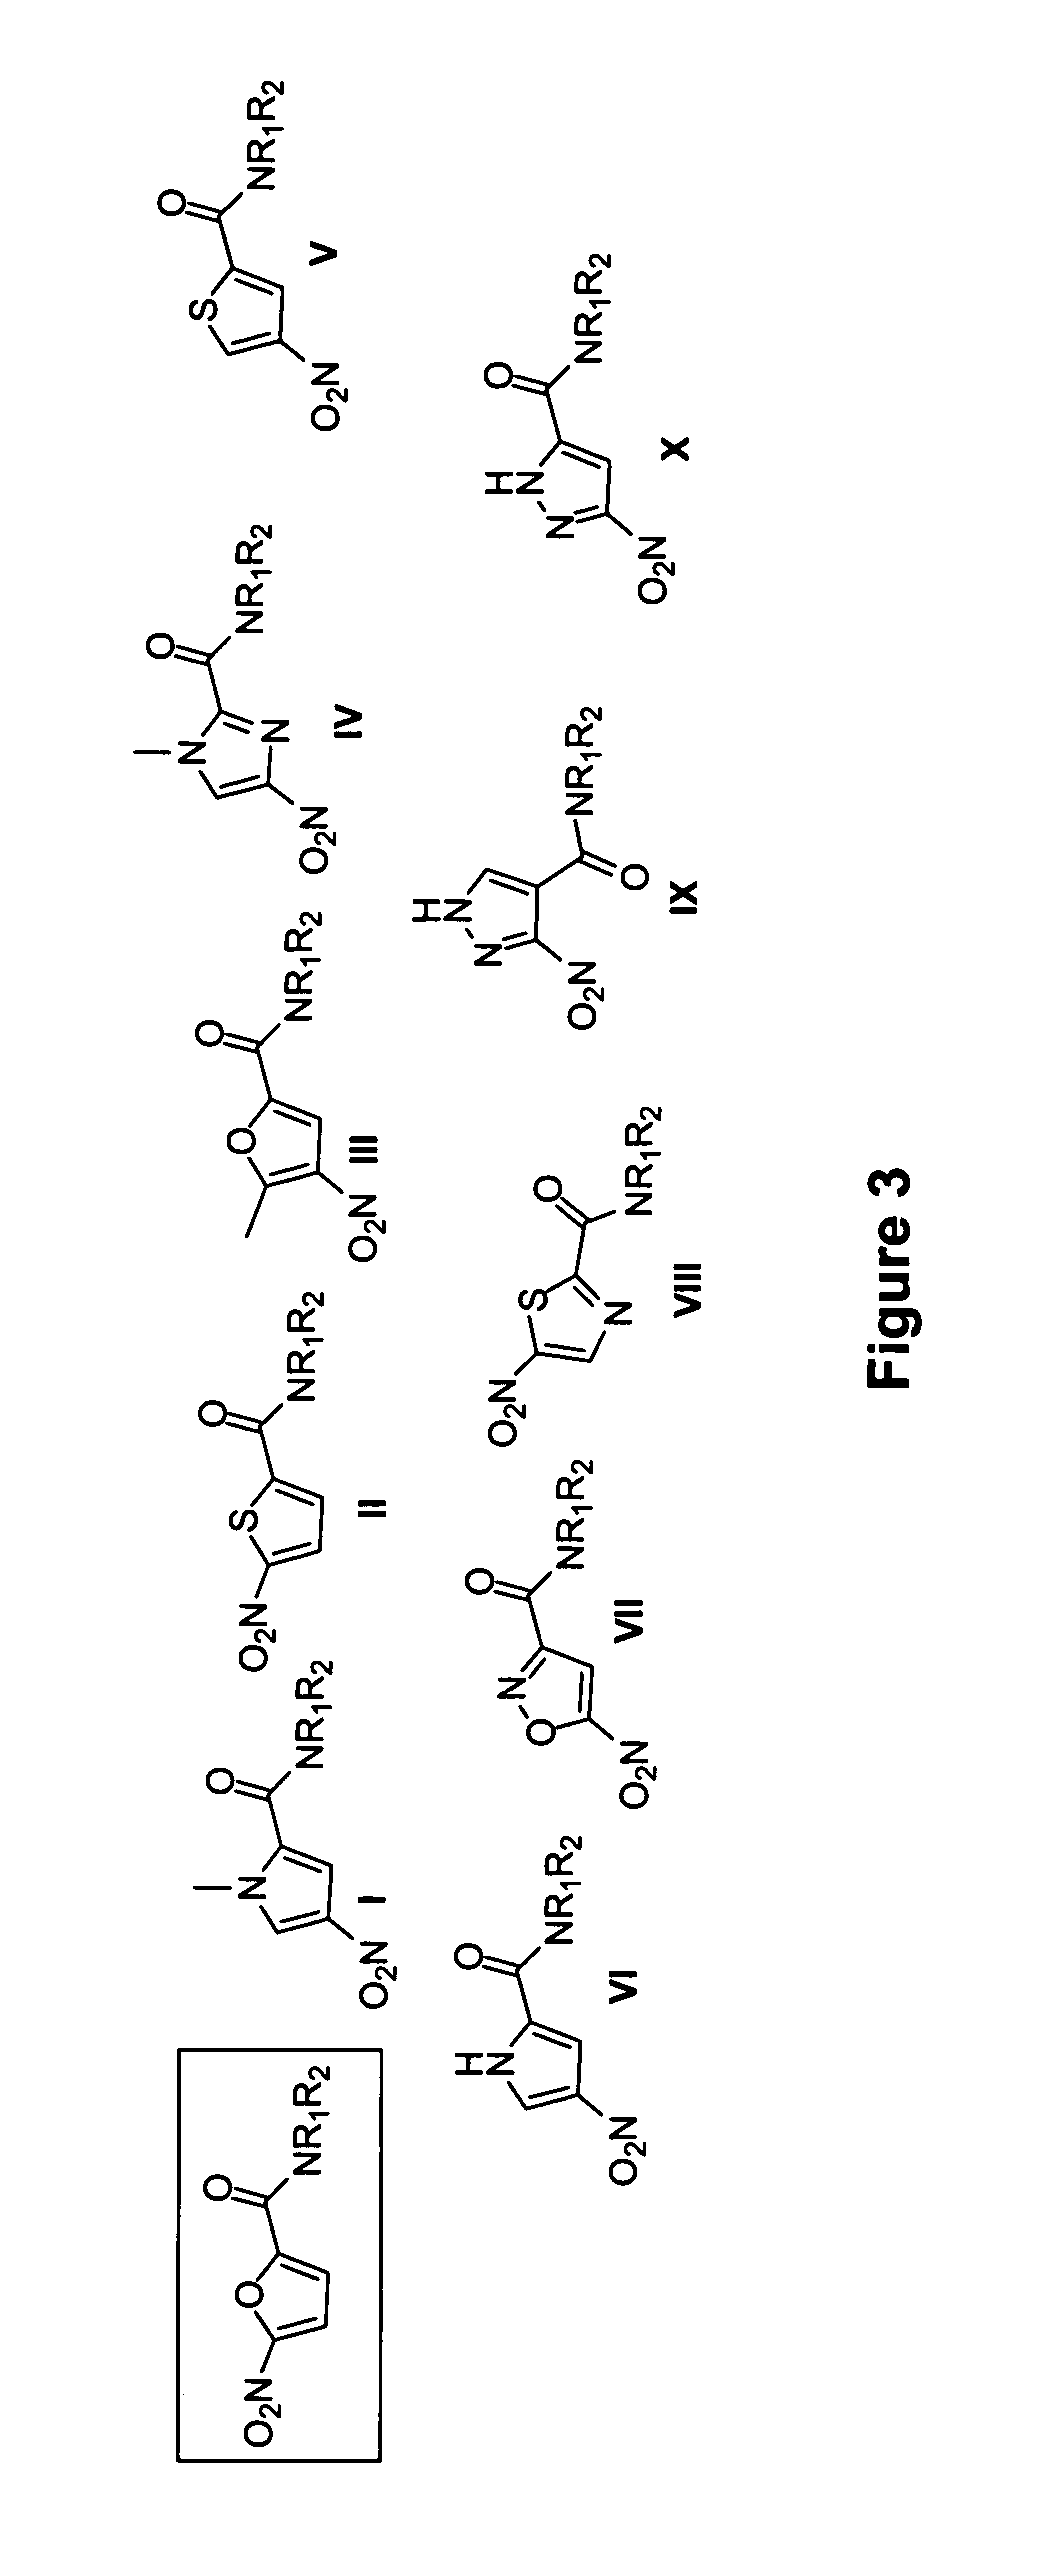 Heterocyclic amides with anti-tuberculosis activity